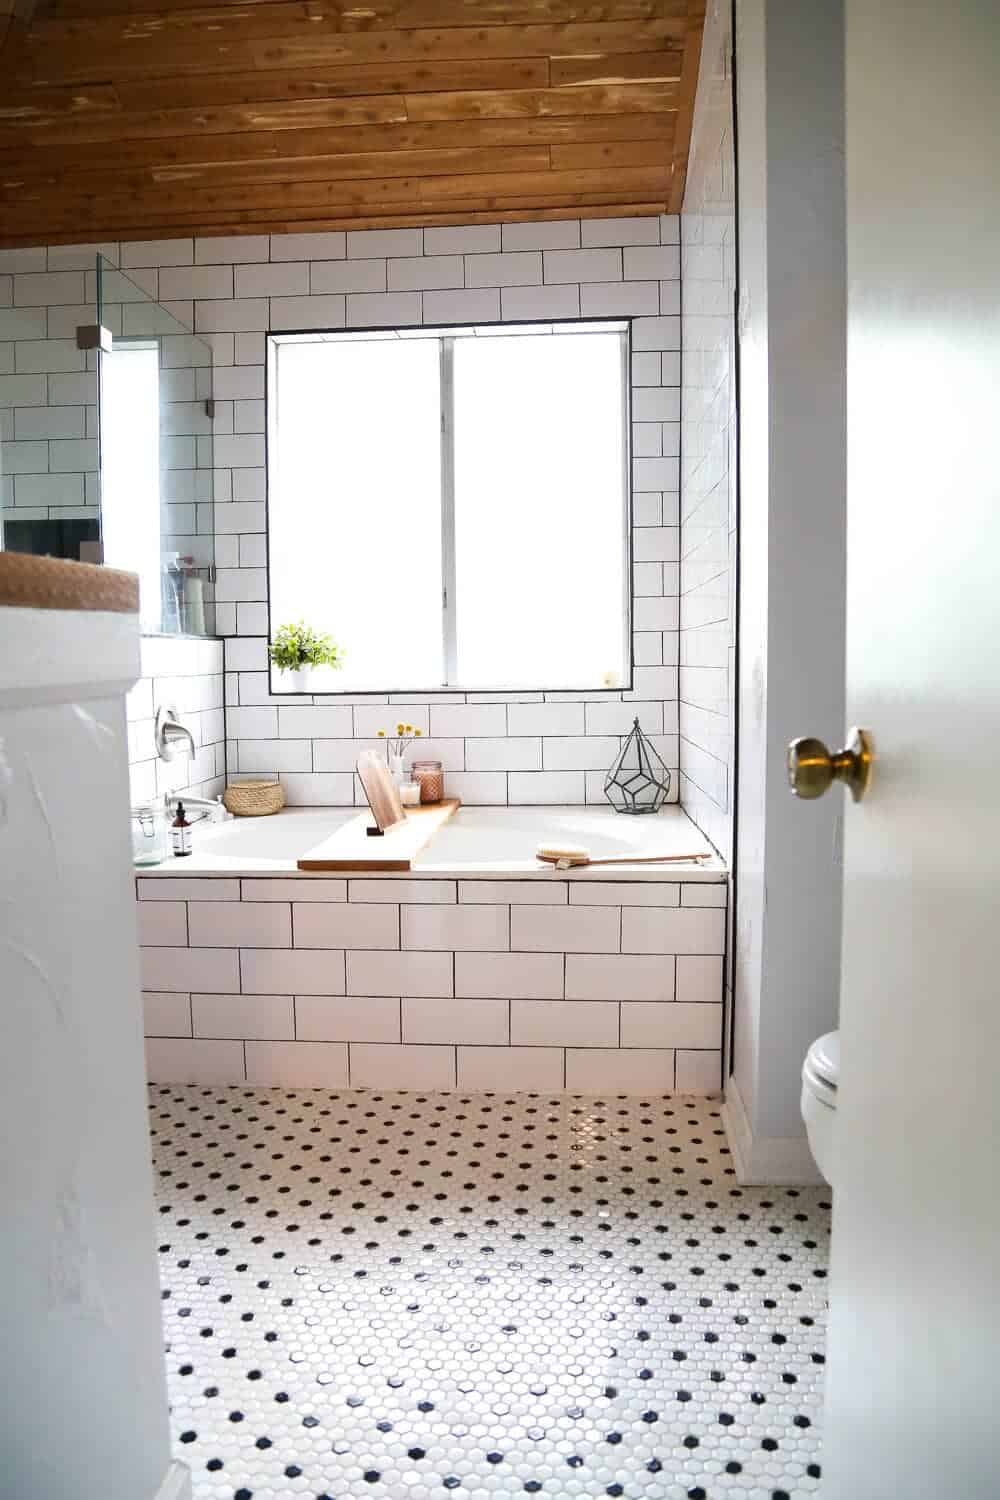 Our DIY Budget Bathroom Renovation Love Renovations